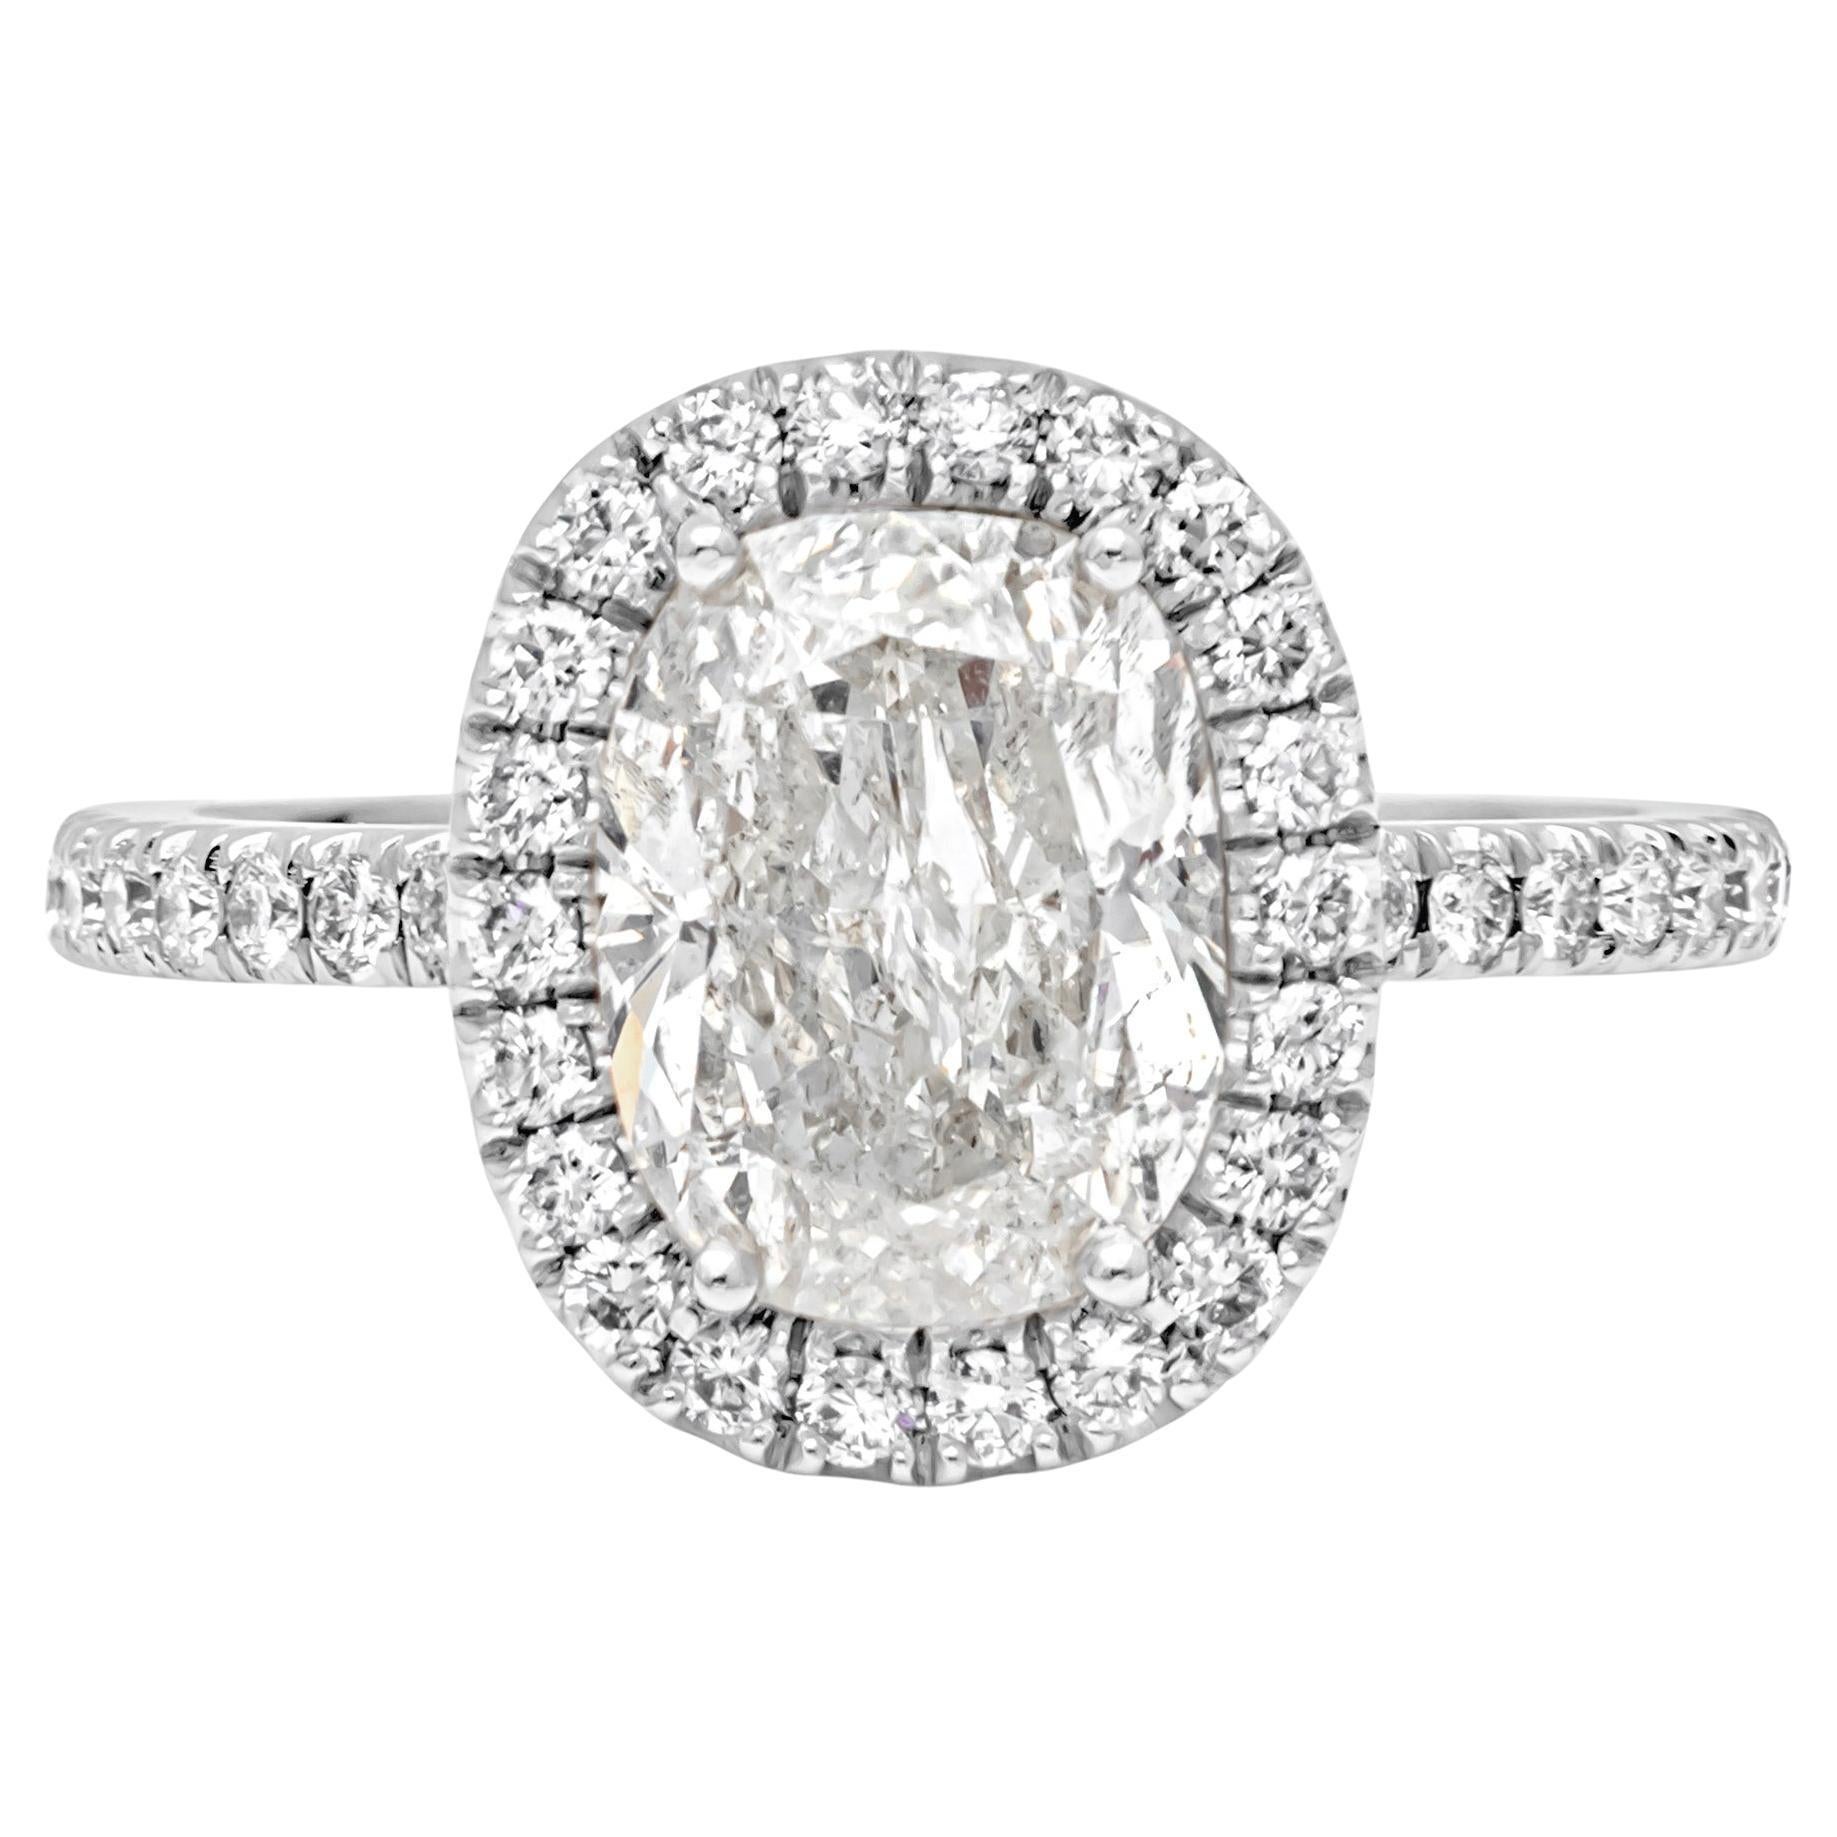 Roman Malakov 2.07 Carat Elongated Cushion Cut Diamond Halo Pave Engagement Ring For Sale